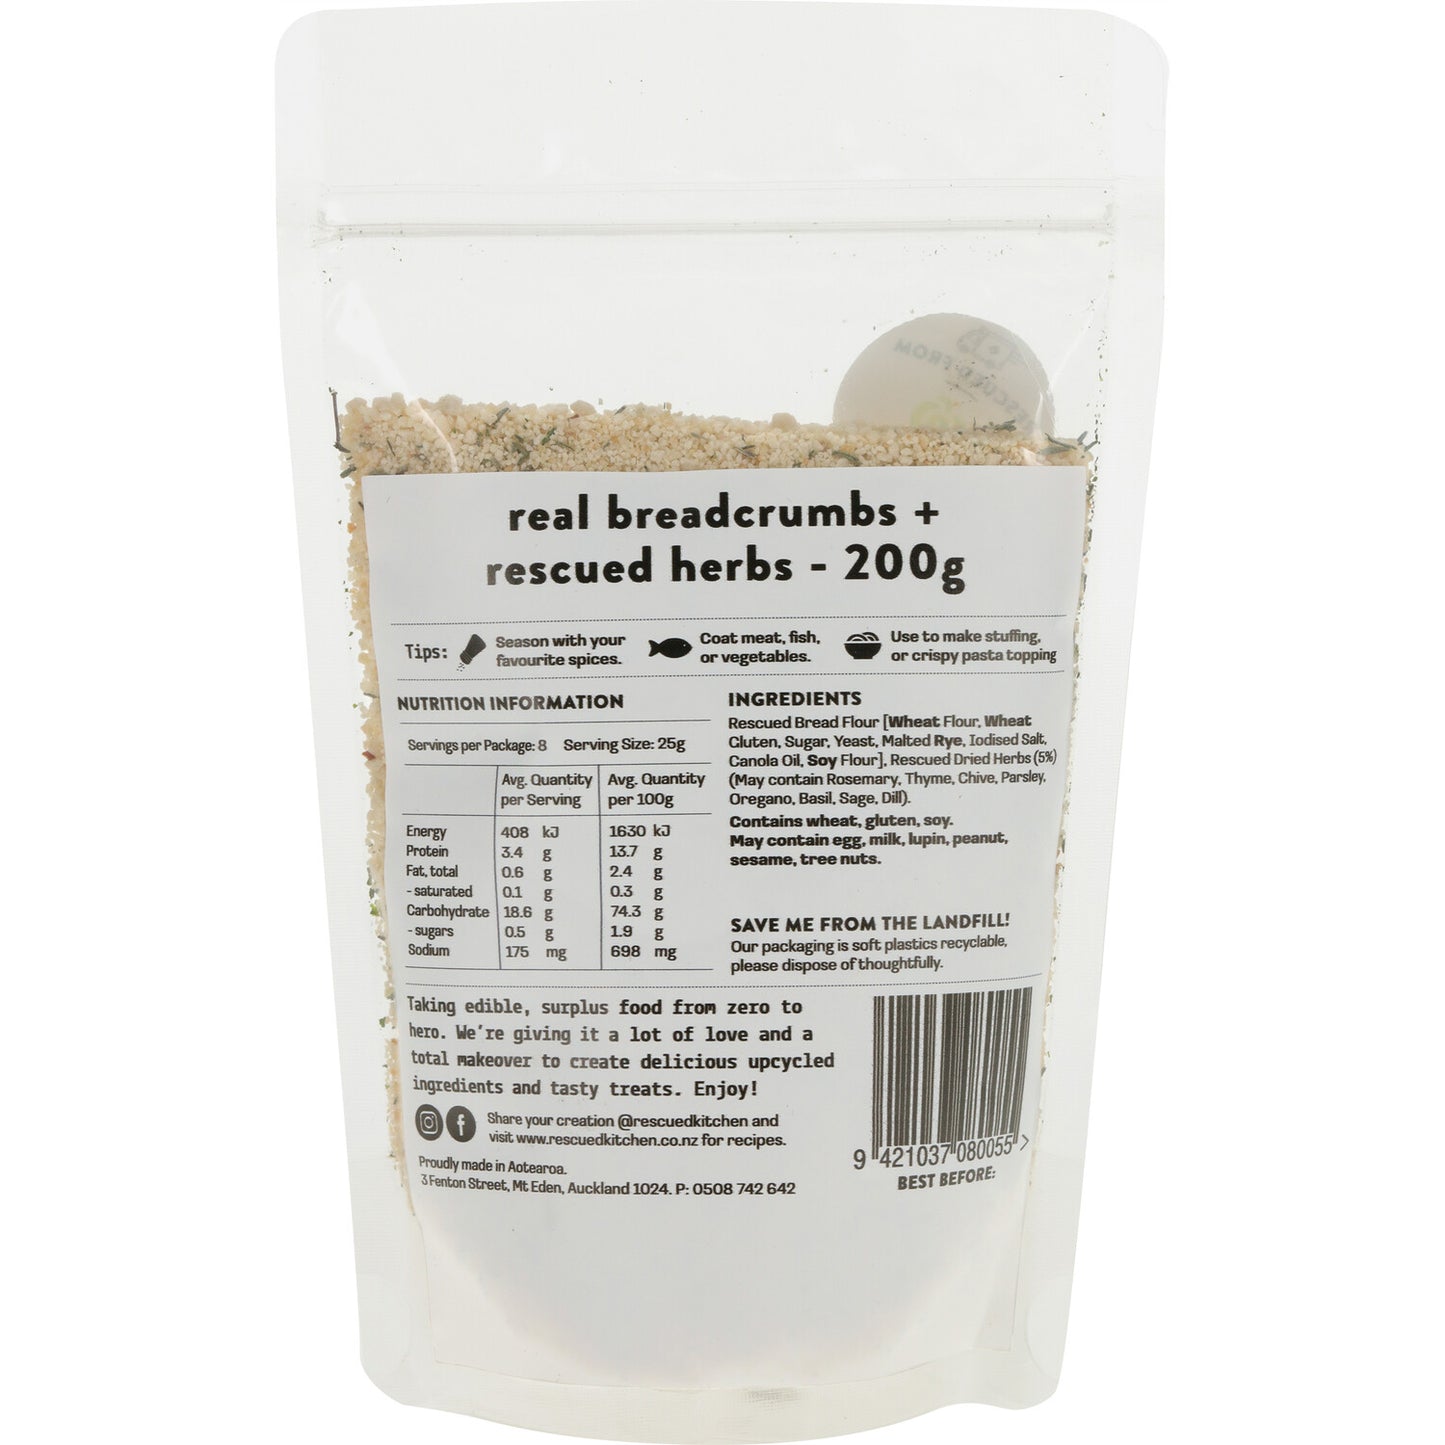 breadcrumbs - plain or rescued herbs